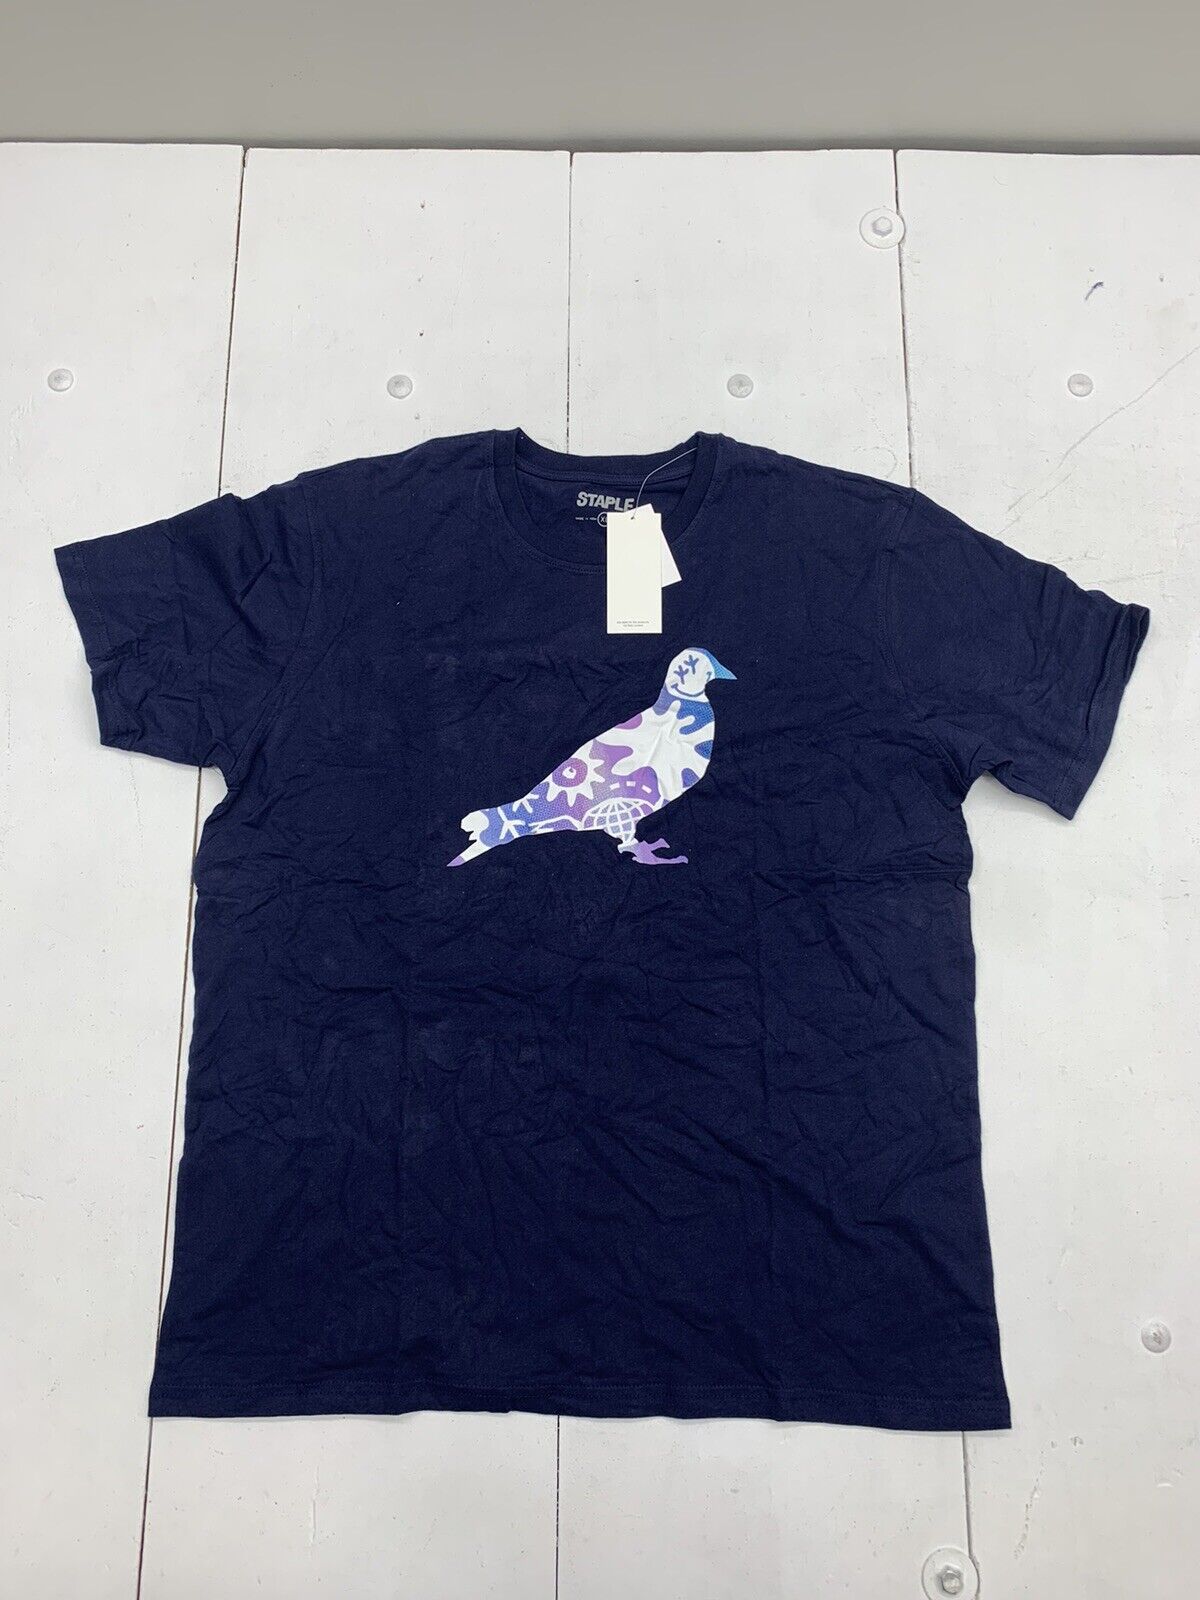 Staple Mens Dark Blue Short Sleeve Graphic Shirt Size XL